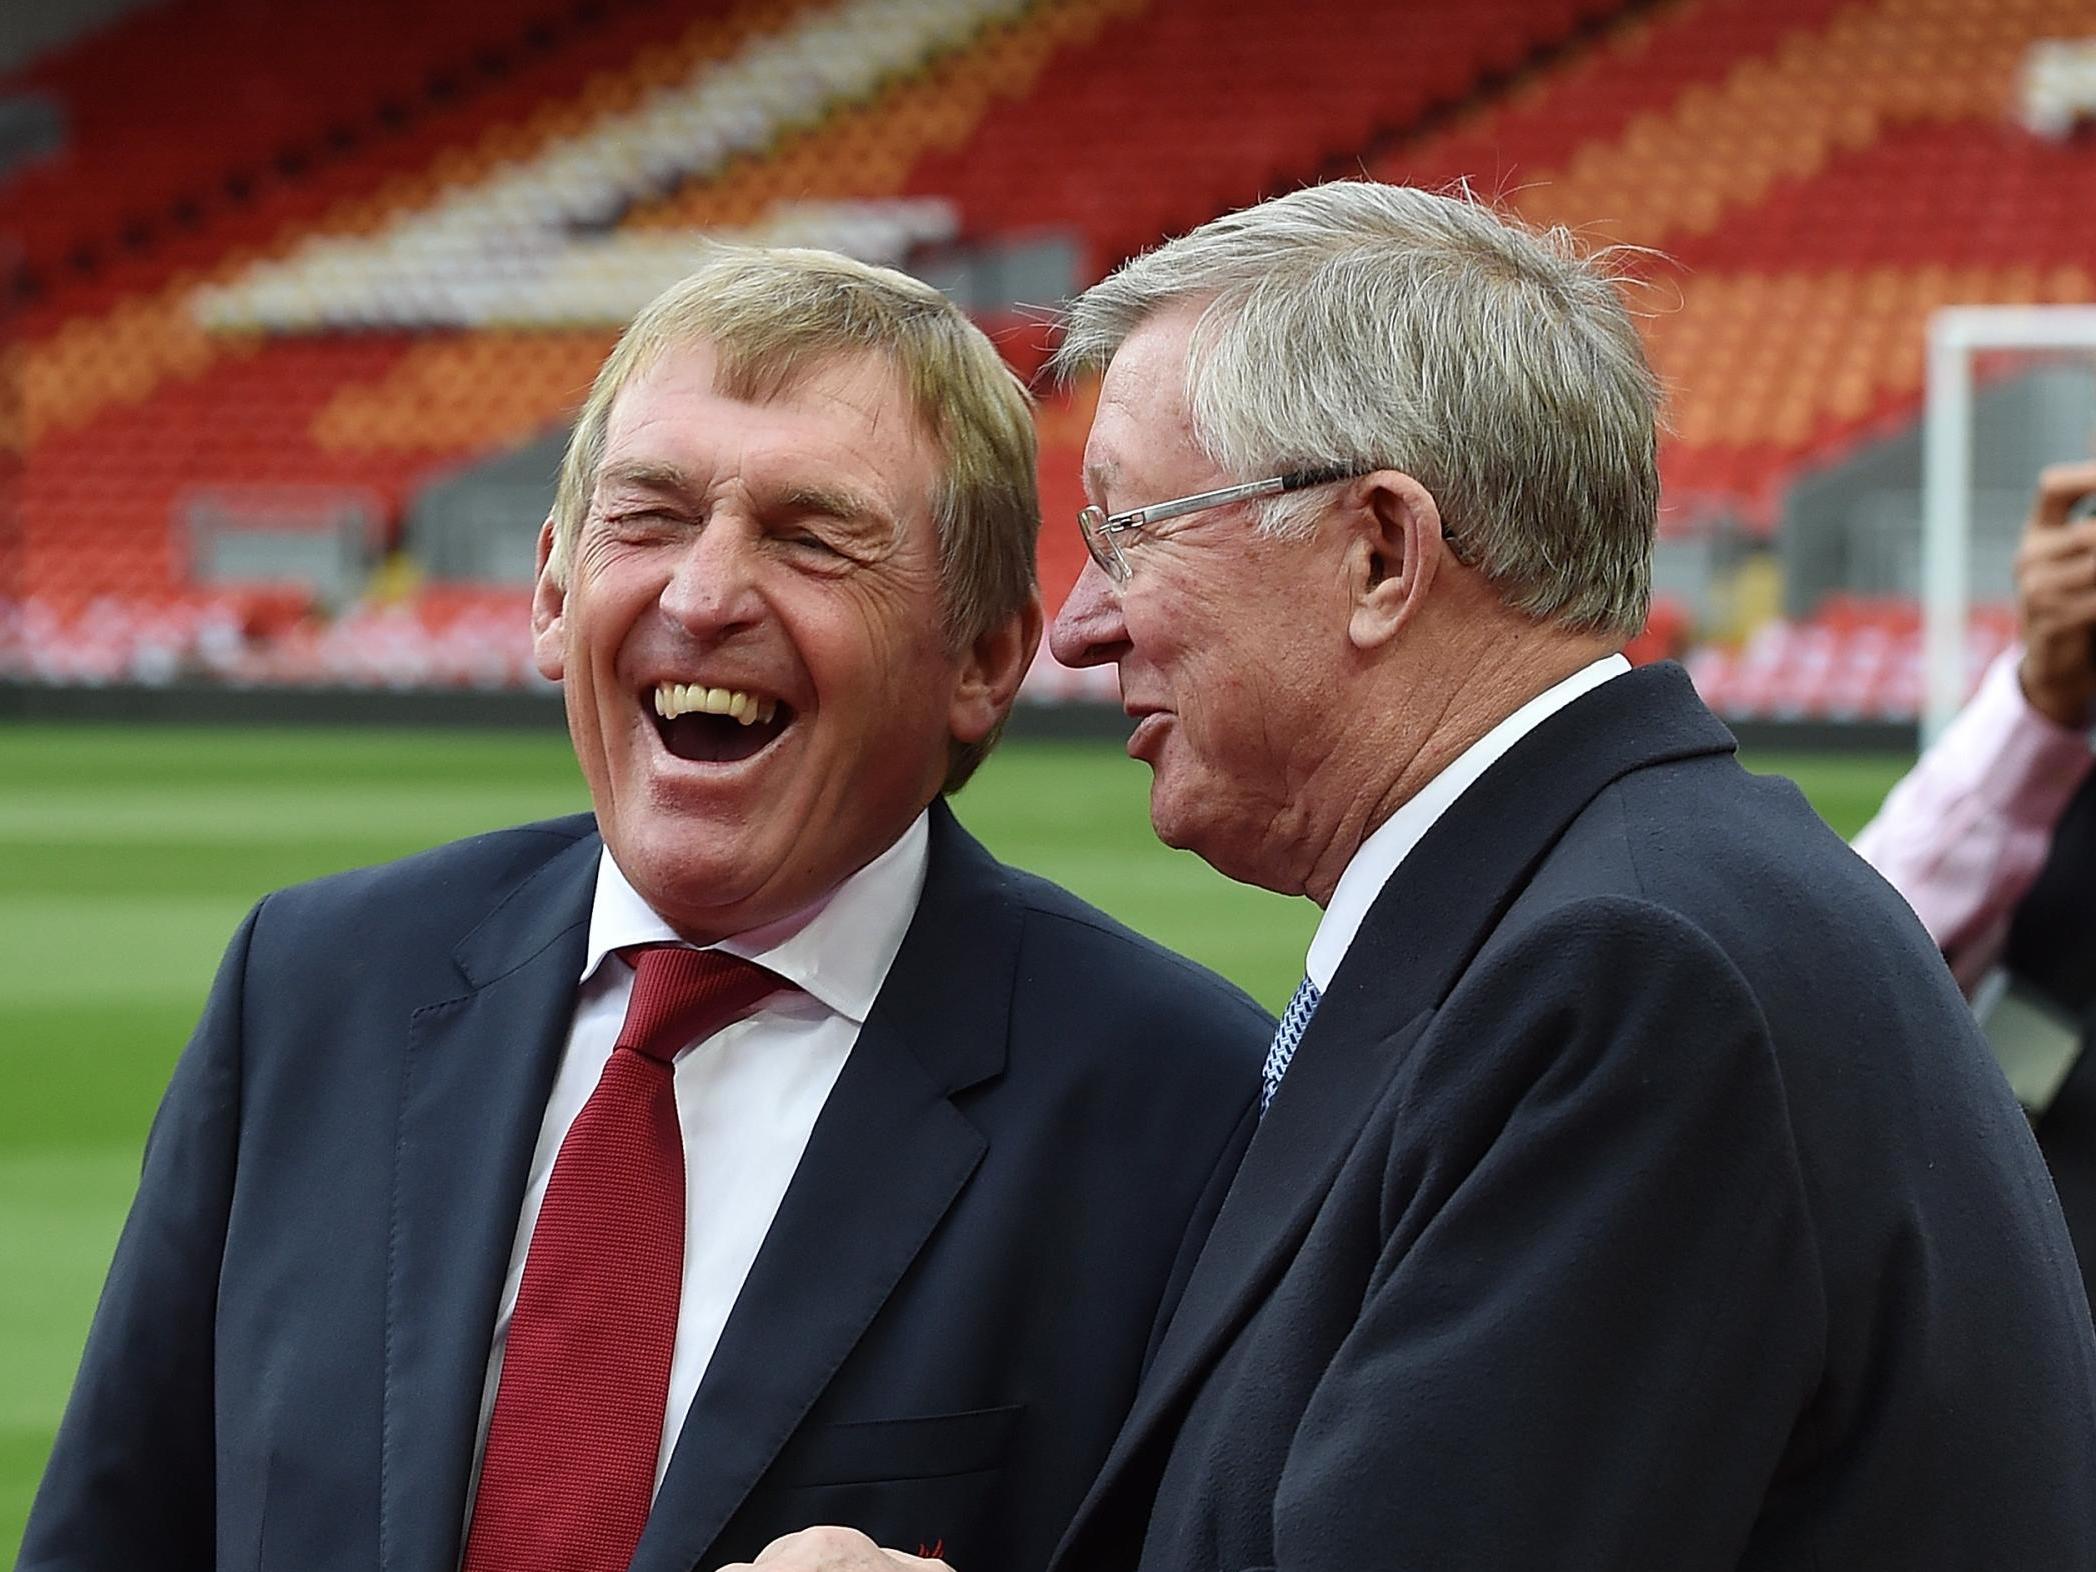 Sir Alex Ferguson congratulated Liverpool on Premier League title win, reveals Kenny Dalglish